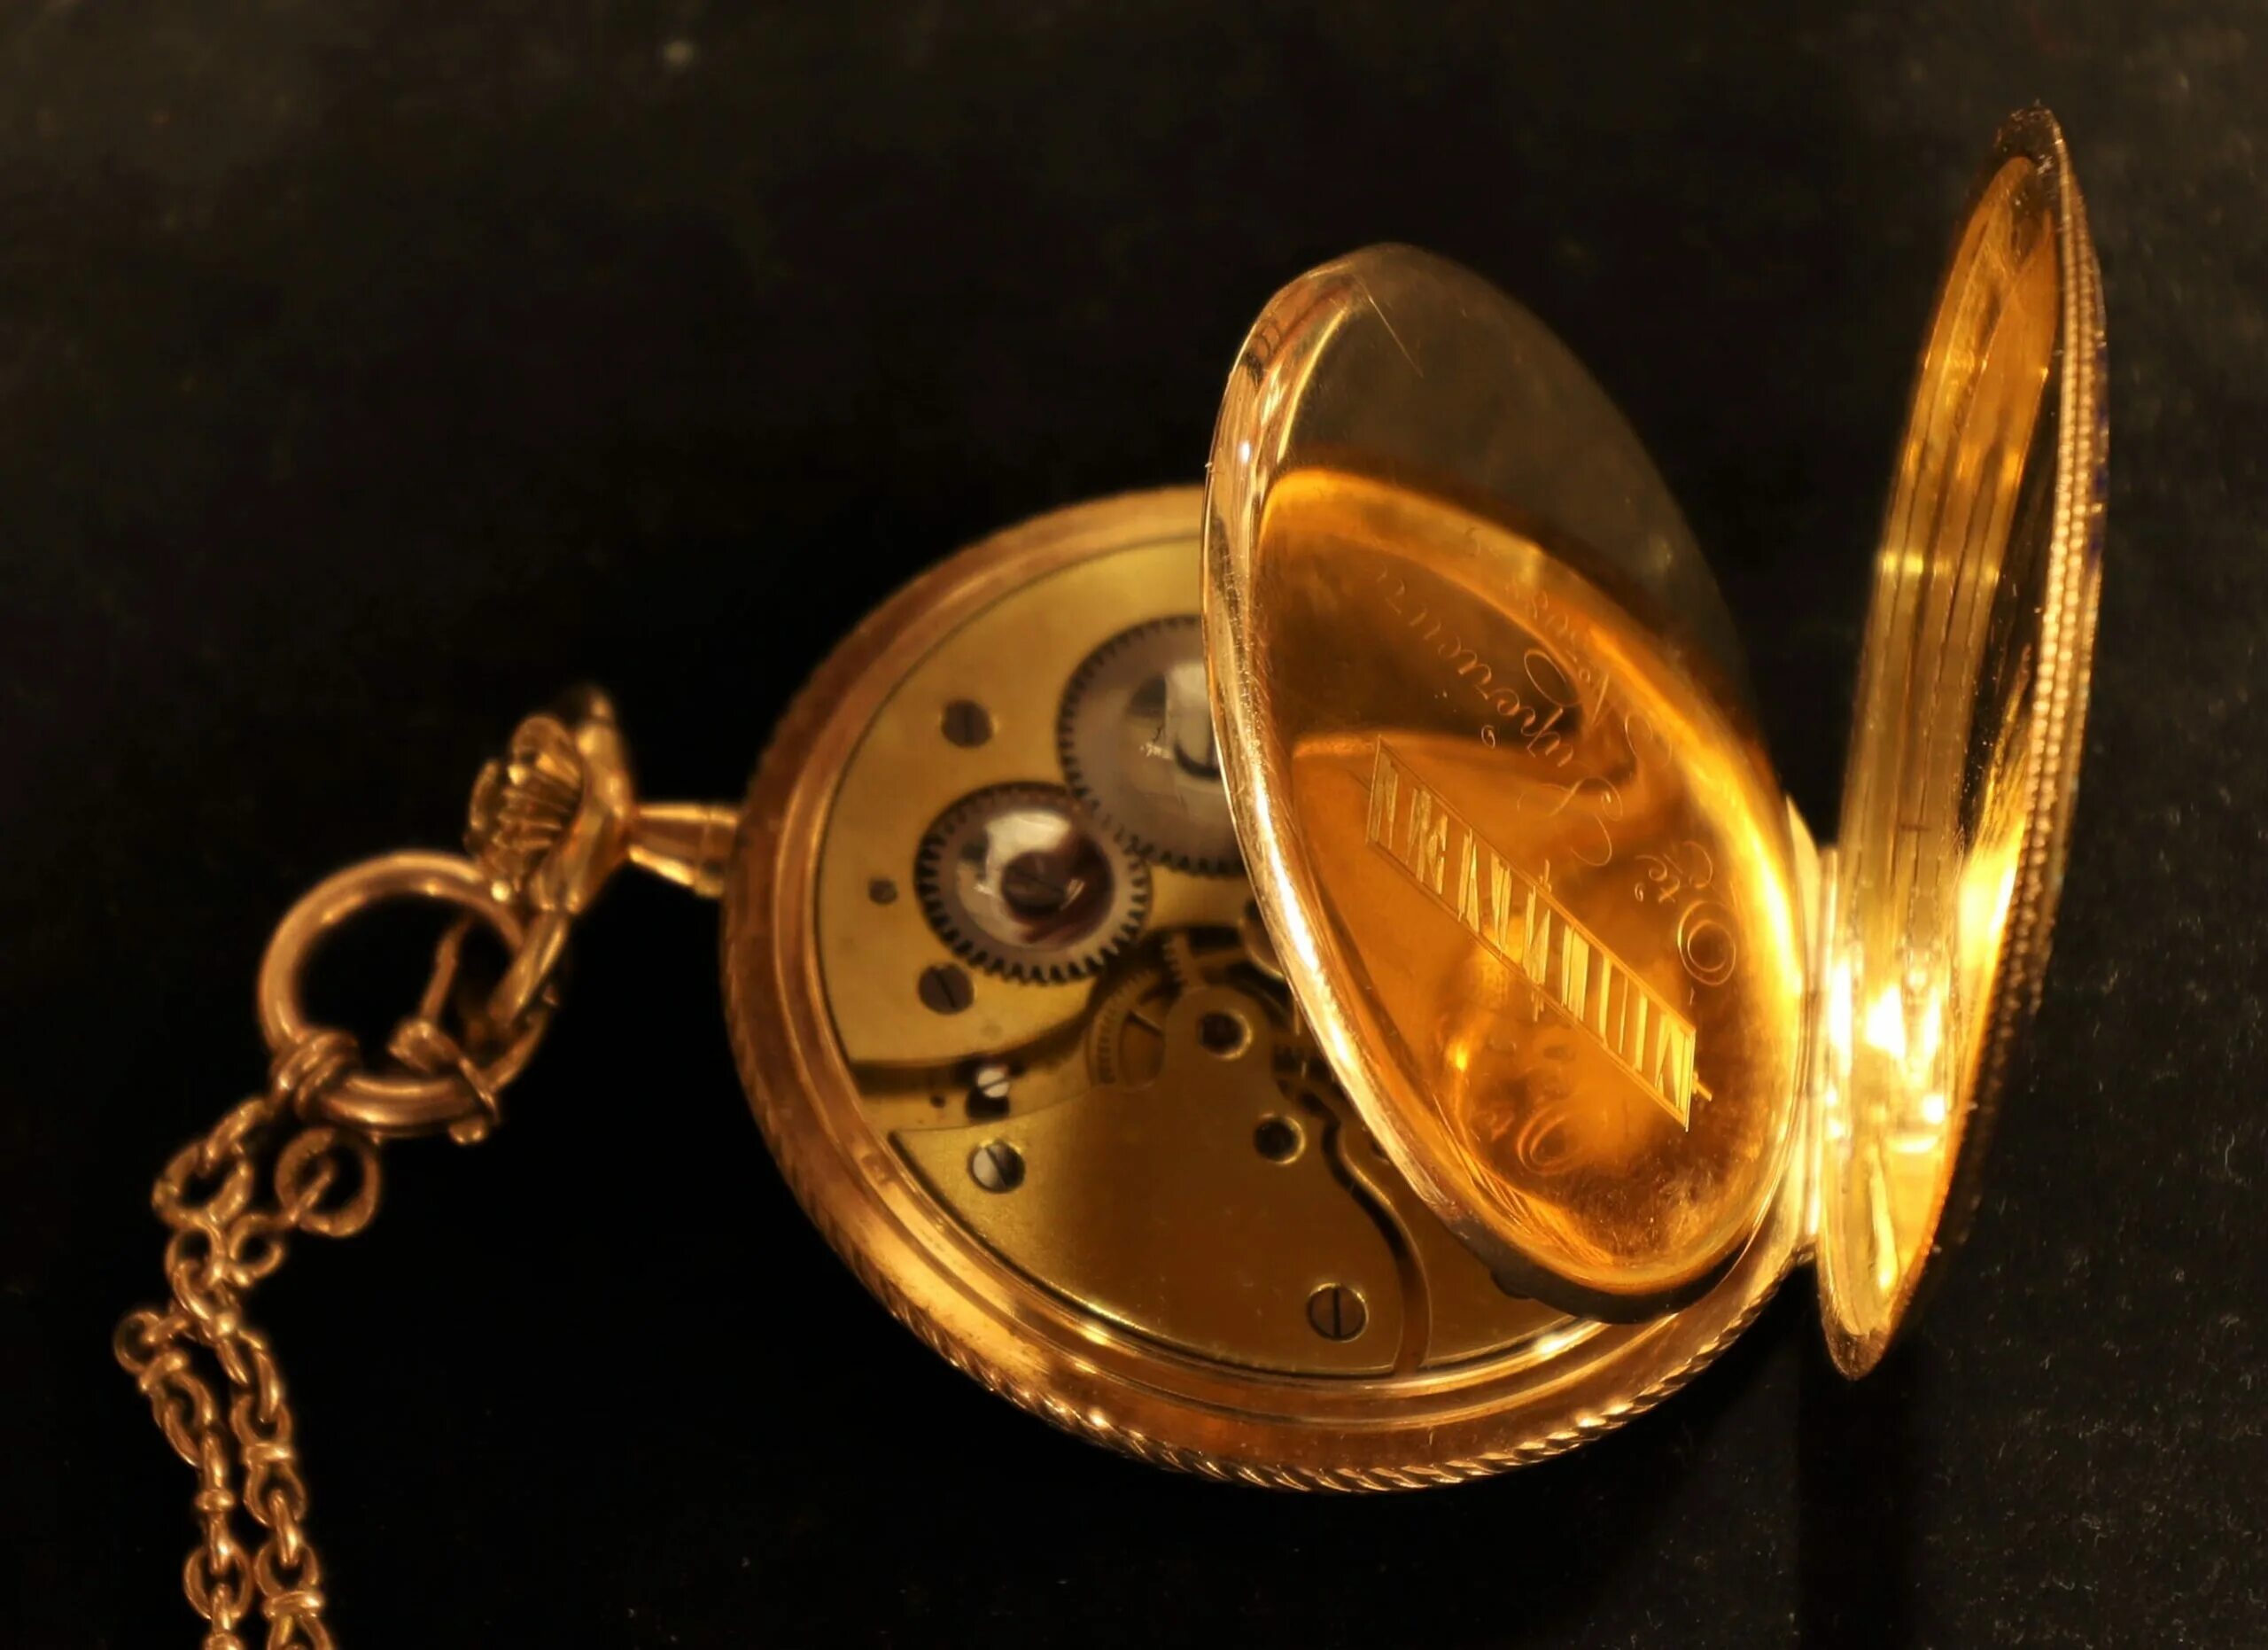 Moulinet часы карманные золотые. Часы золотые 19 века Швейцария карманные. Карманные часы Elite Argentan. Часы карманные Швейцария 19 век.